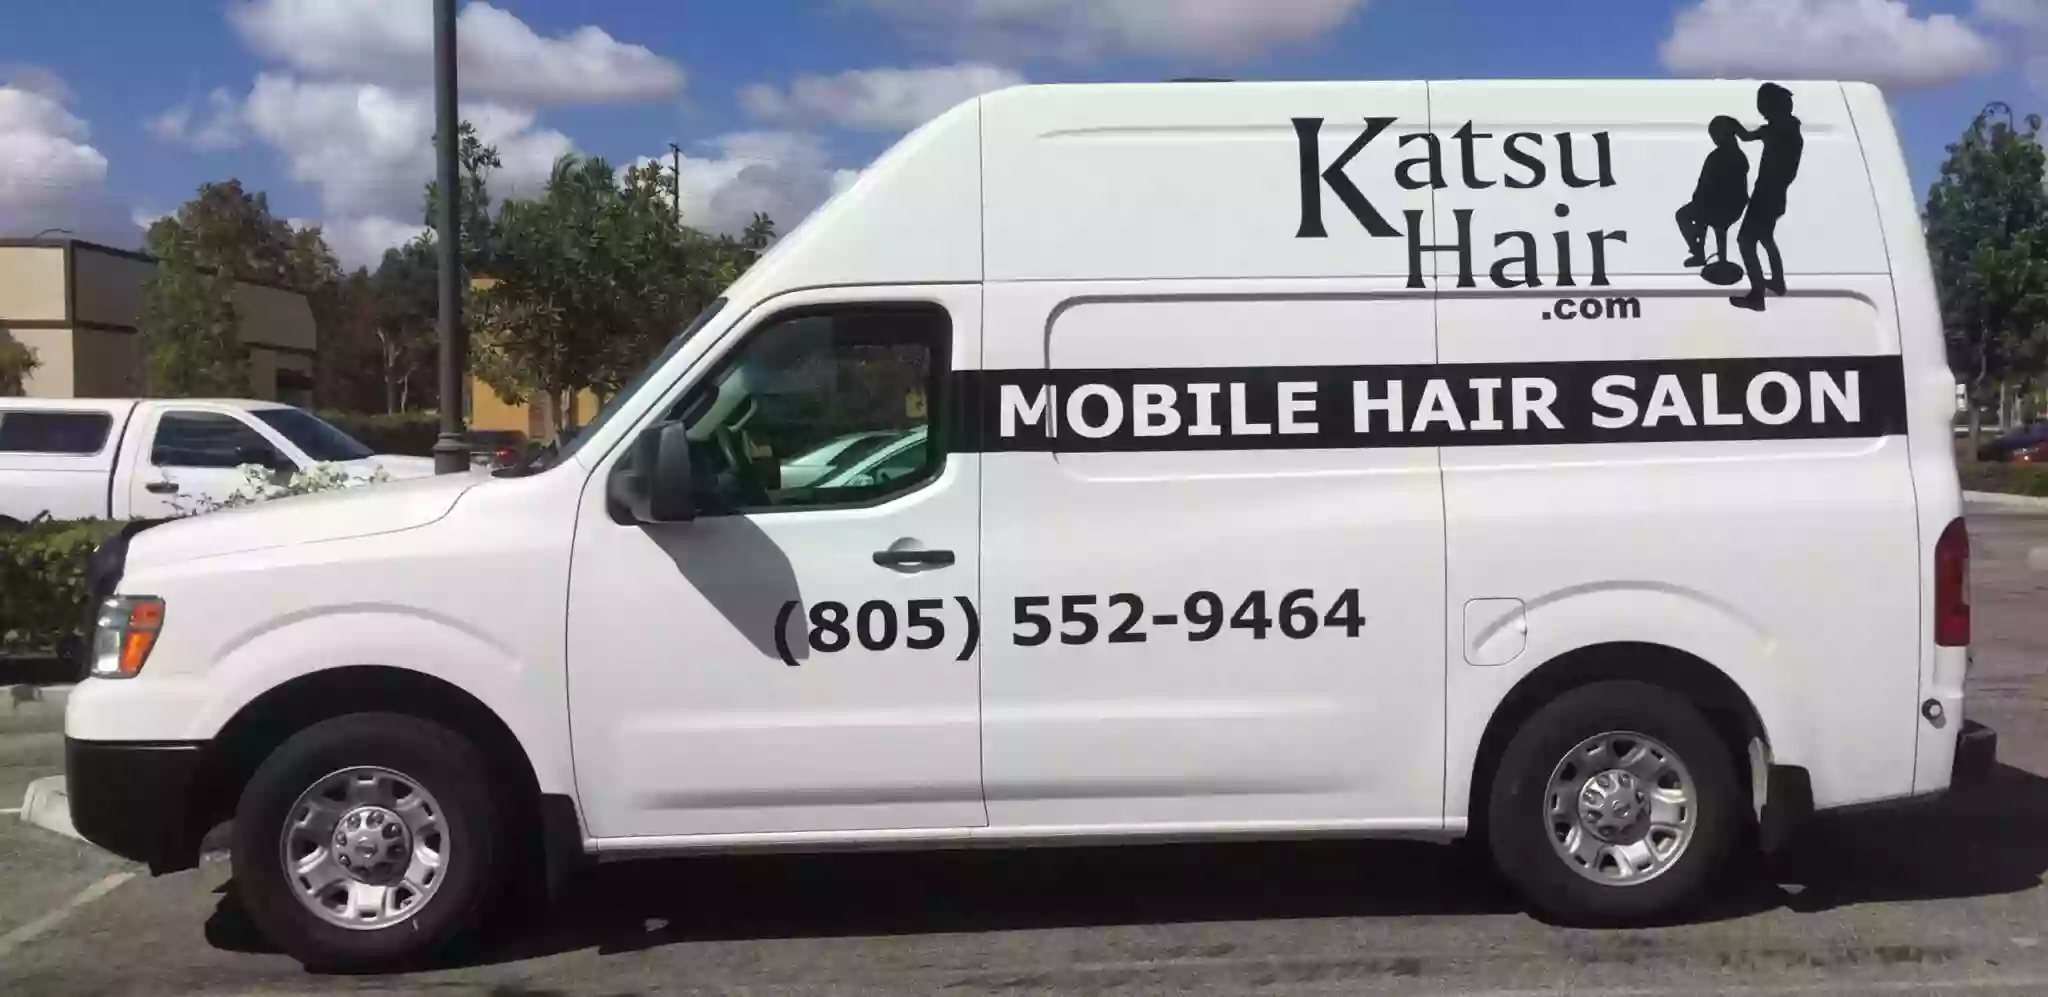 Katsu Hair Mobile salon